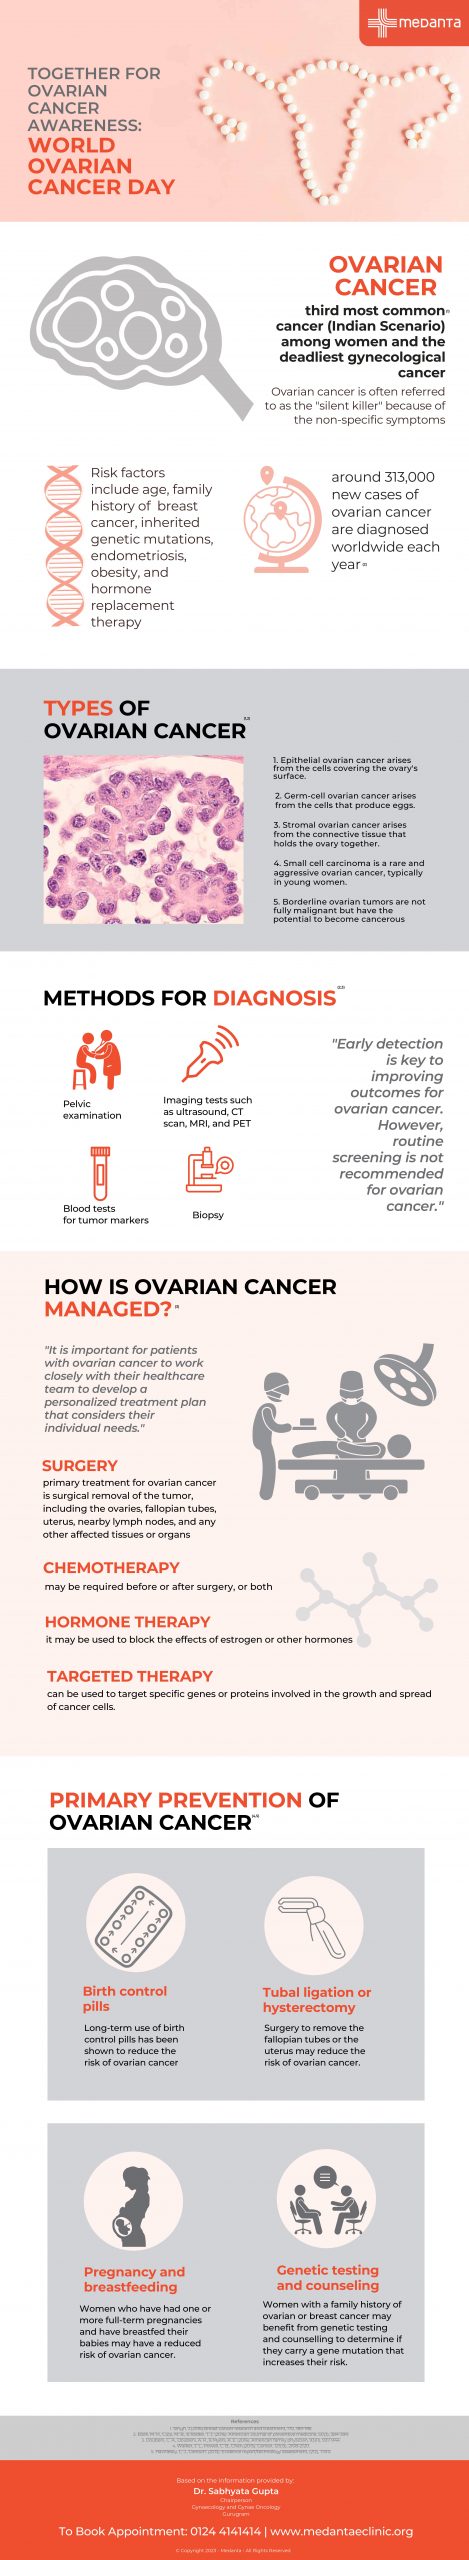 together-for-ovarian-cancer-awareness-world-ovarian-cancer-day